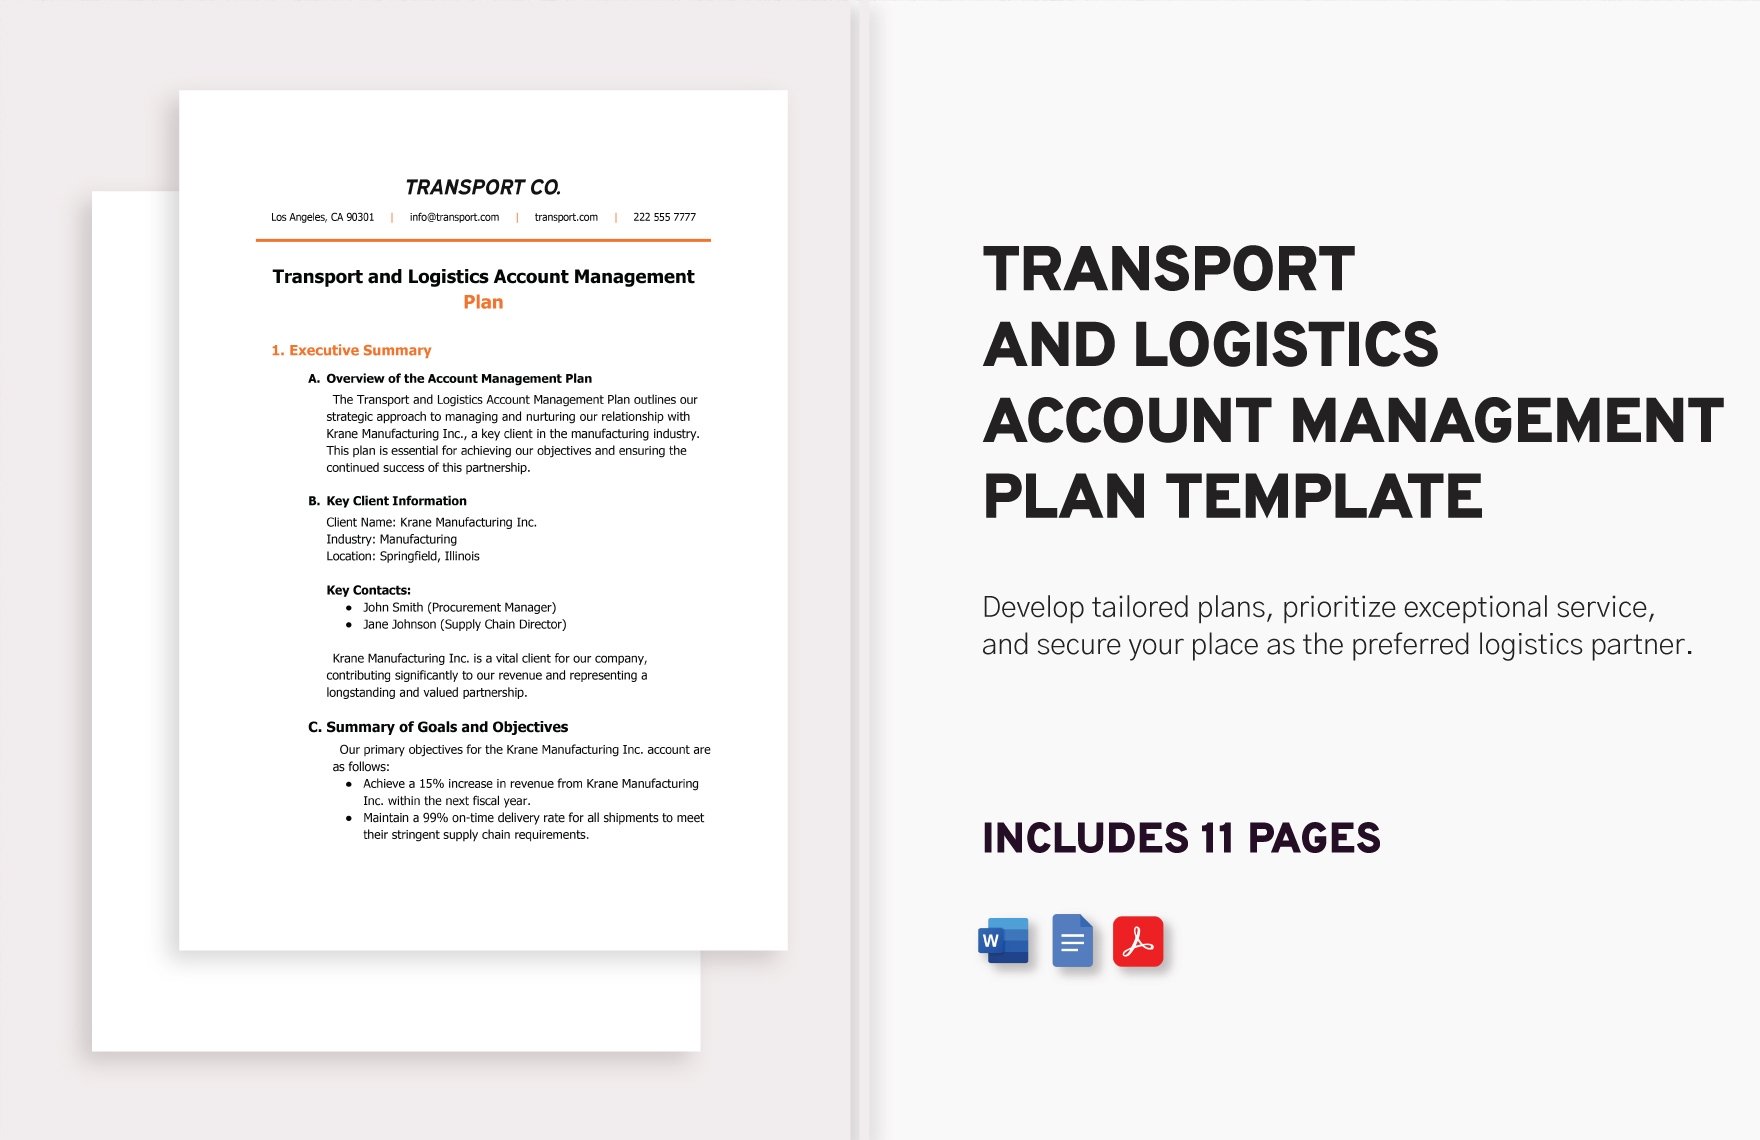 Transport and Logistics Account Management Plan Template